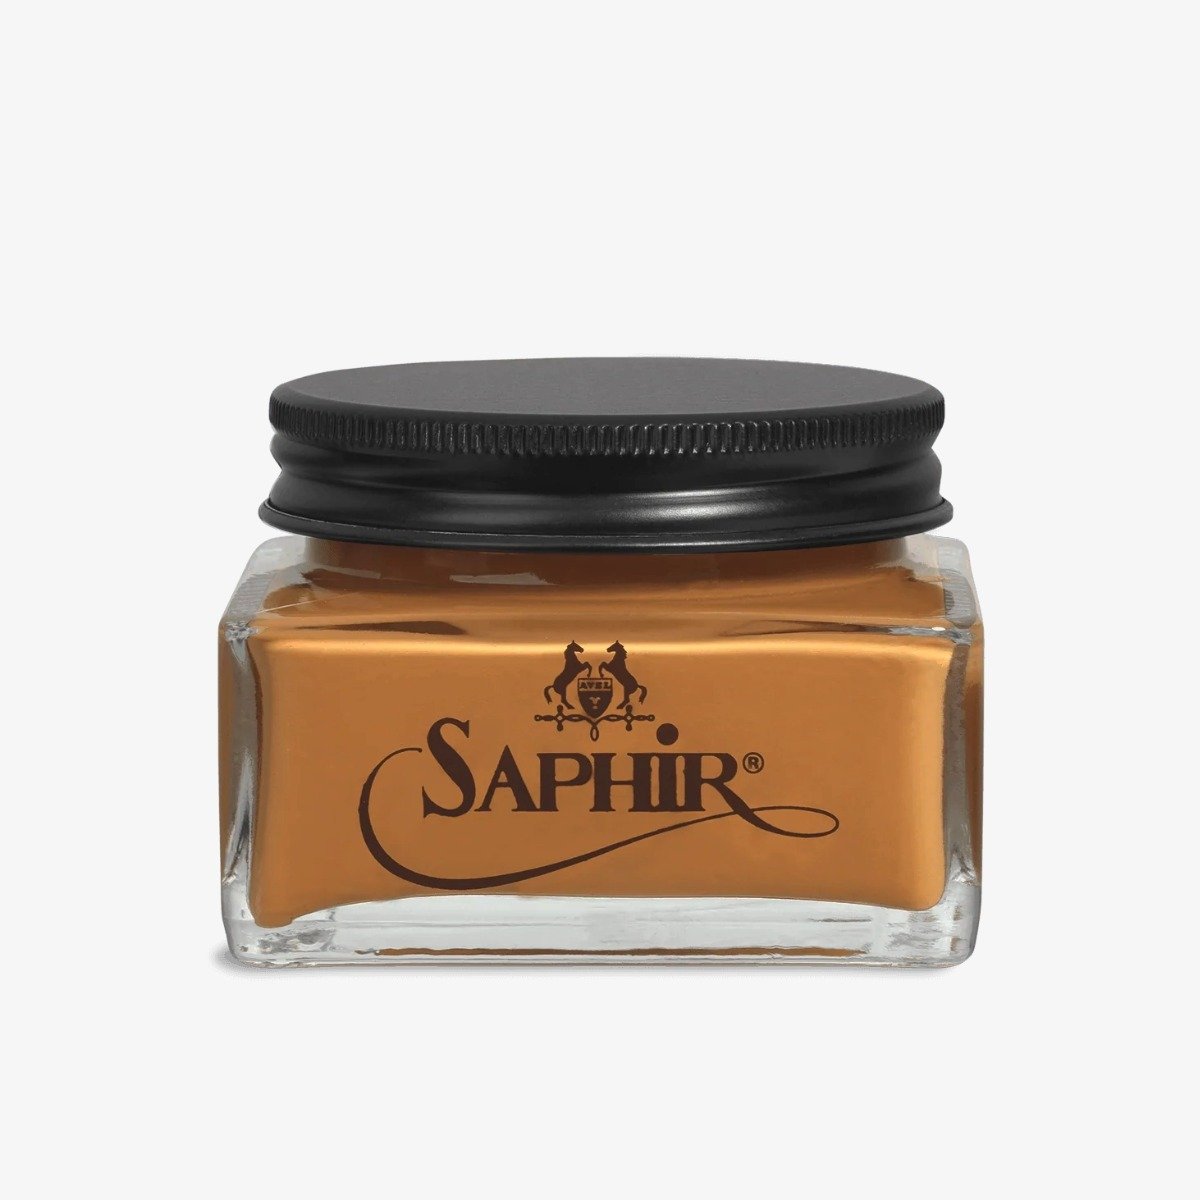 Saphir Creme 1925 light brown